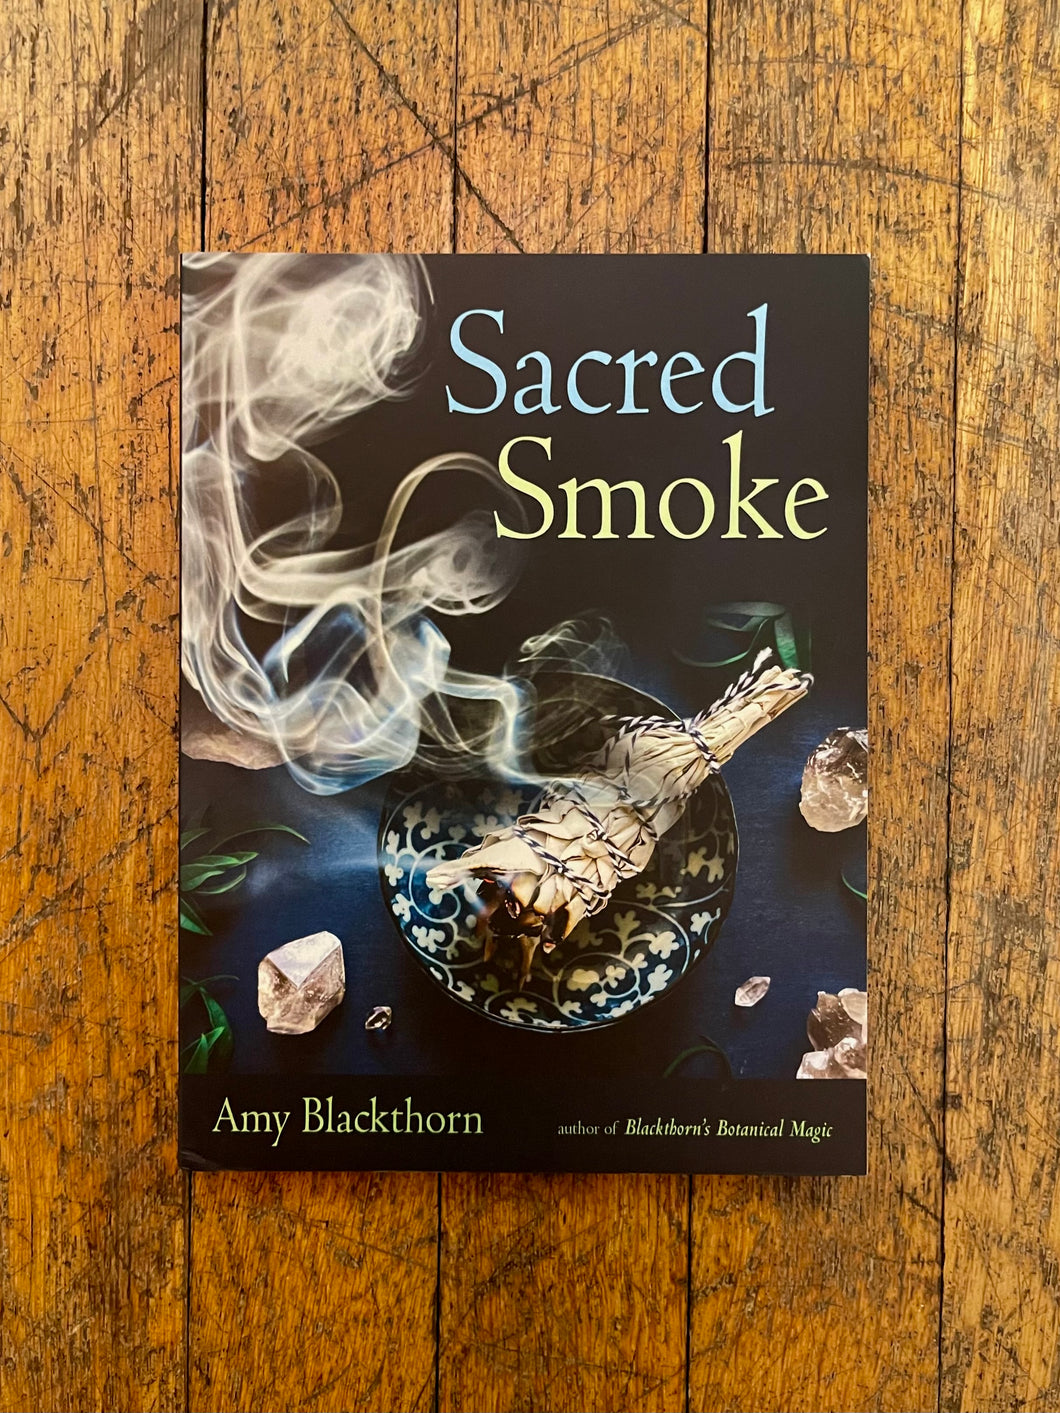 Sacred Smoke by Amy Blackthorn